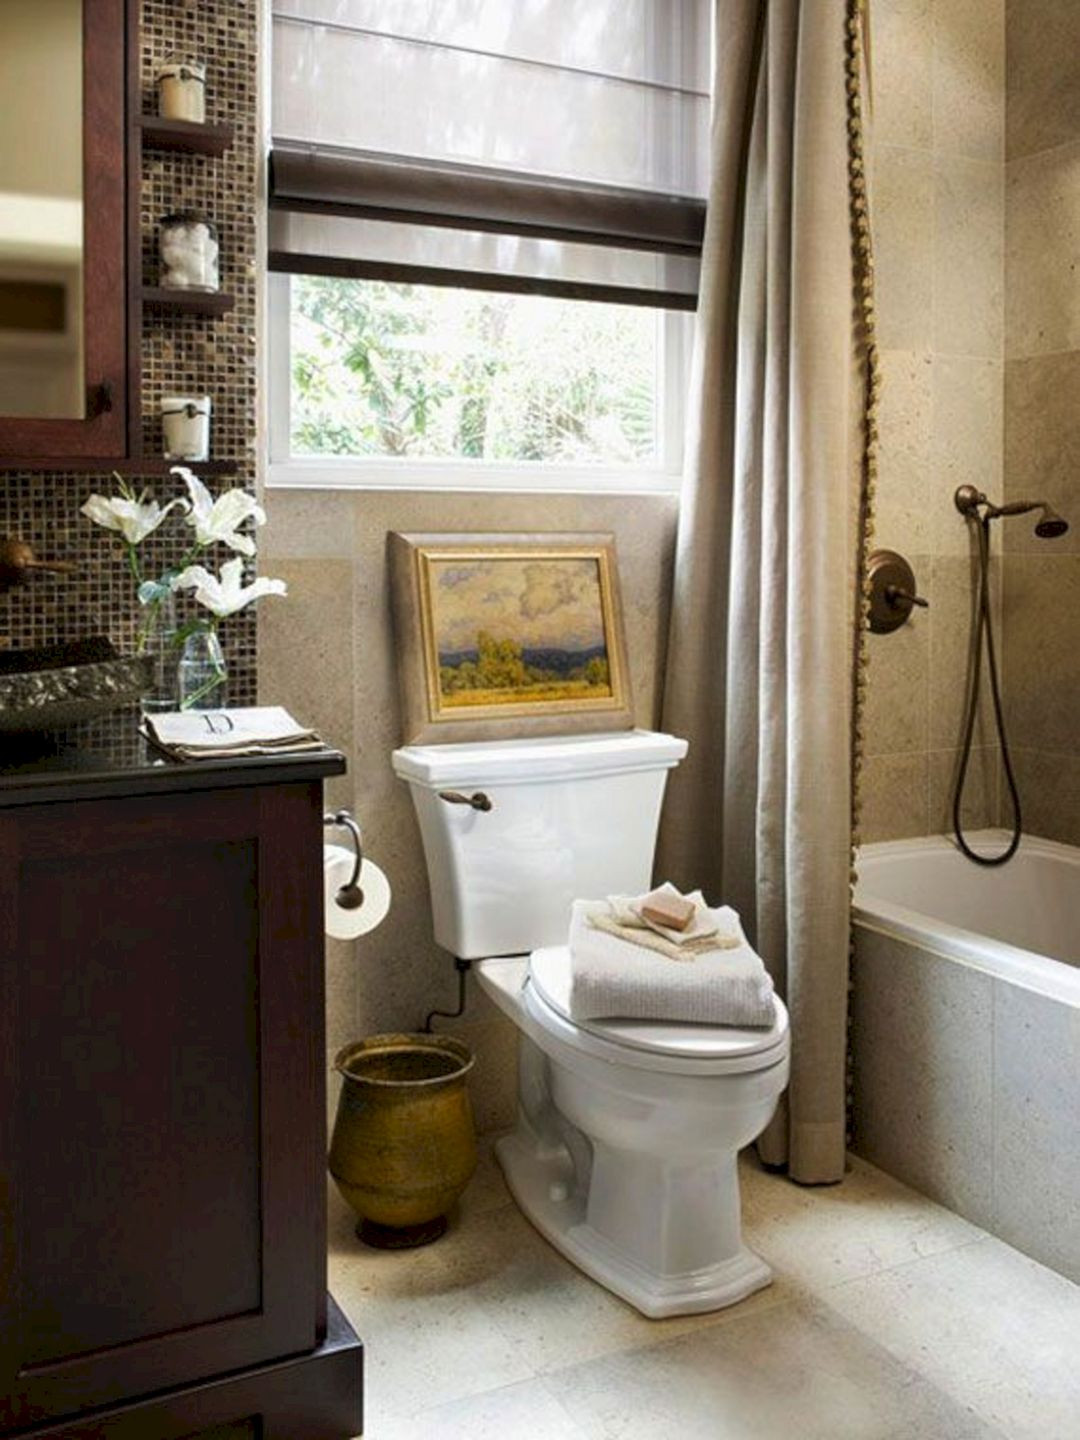 Best ideas about Small Bathroom Design Ideas
. Save or Pin Small Bathroom Ideas Small Bathroom Ideas design ideas Now.